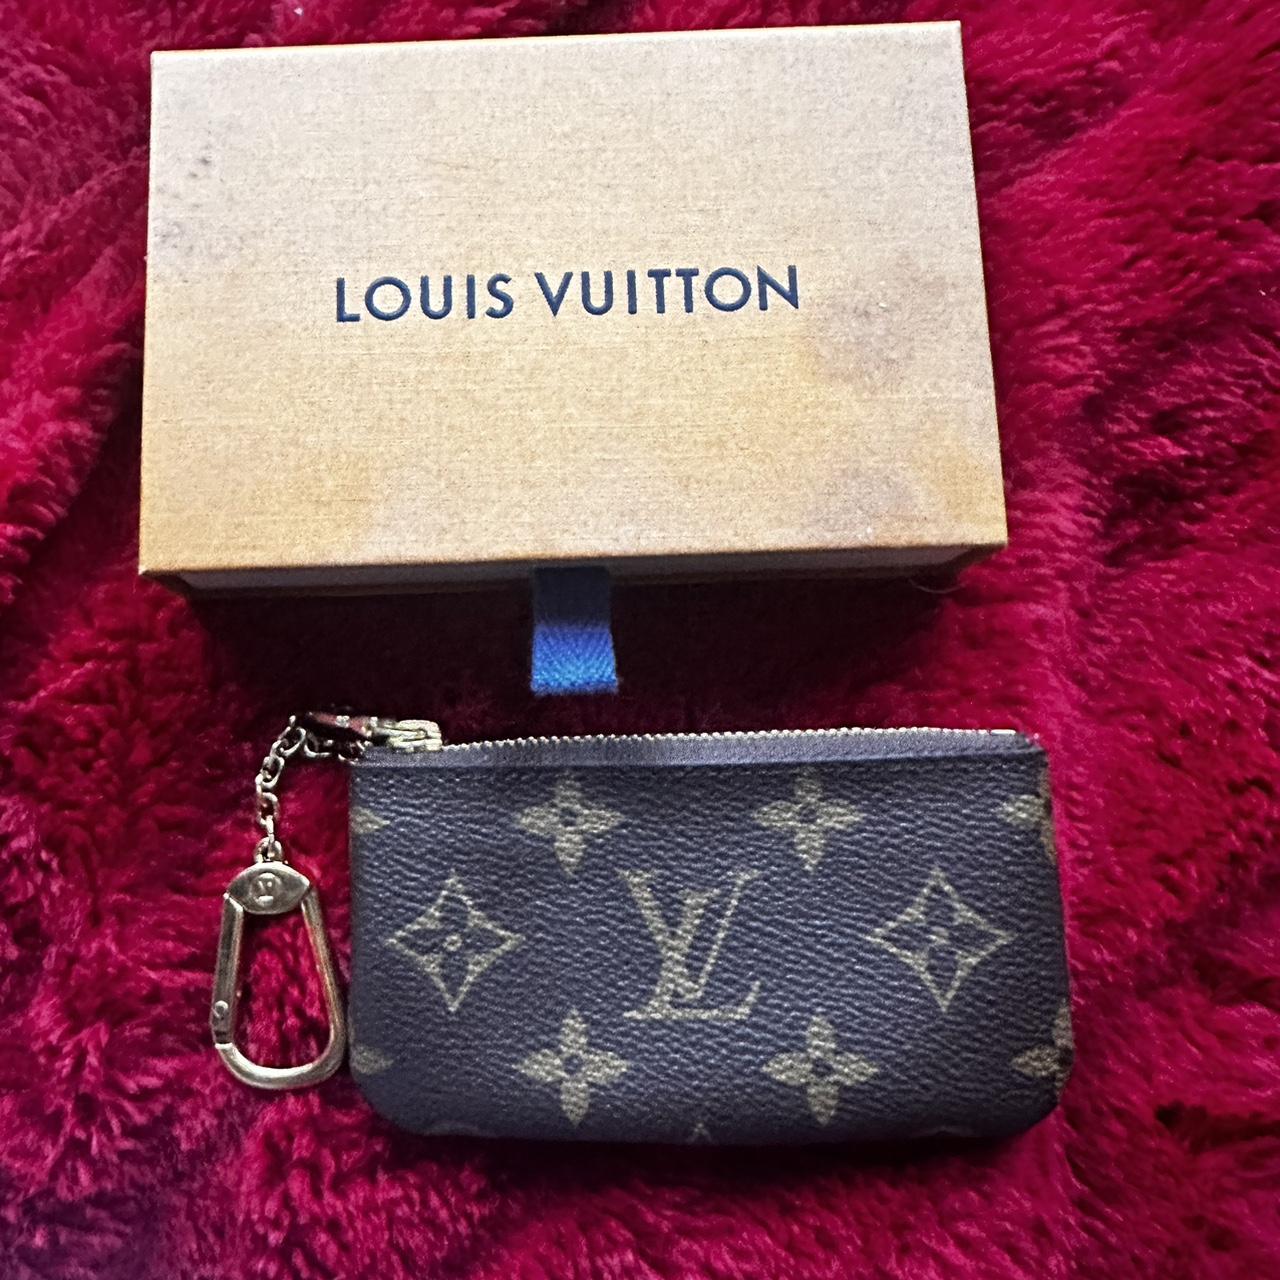 Louis Vuitton coin pouch good condition barley ever - Depop